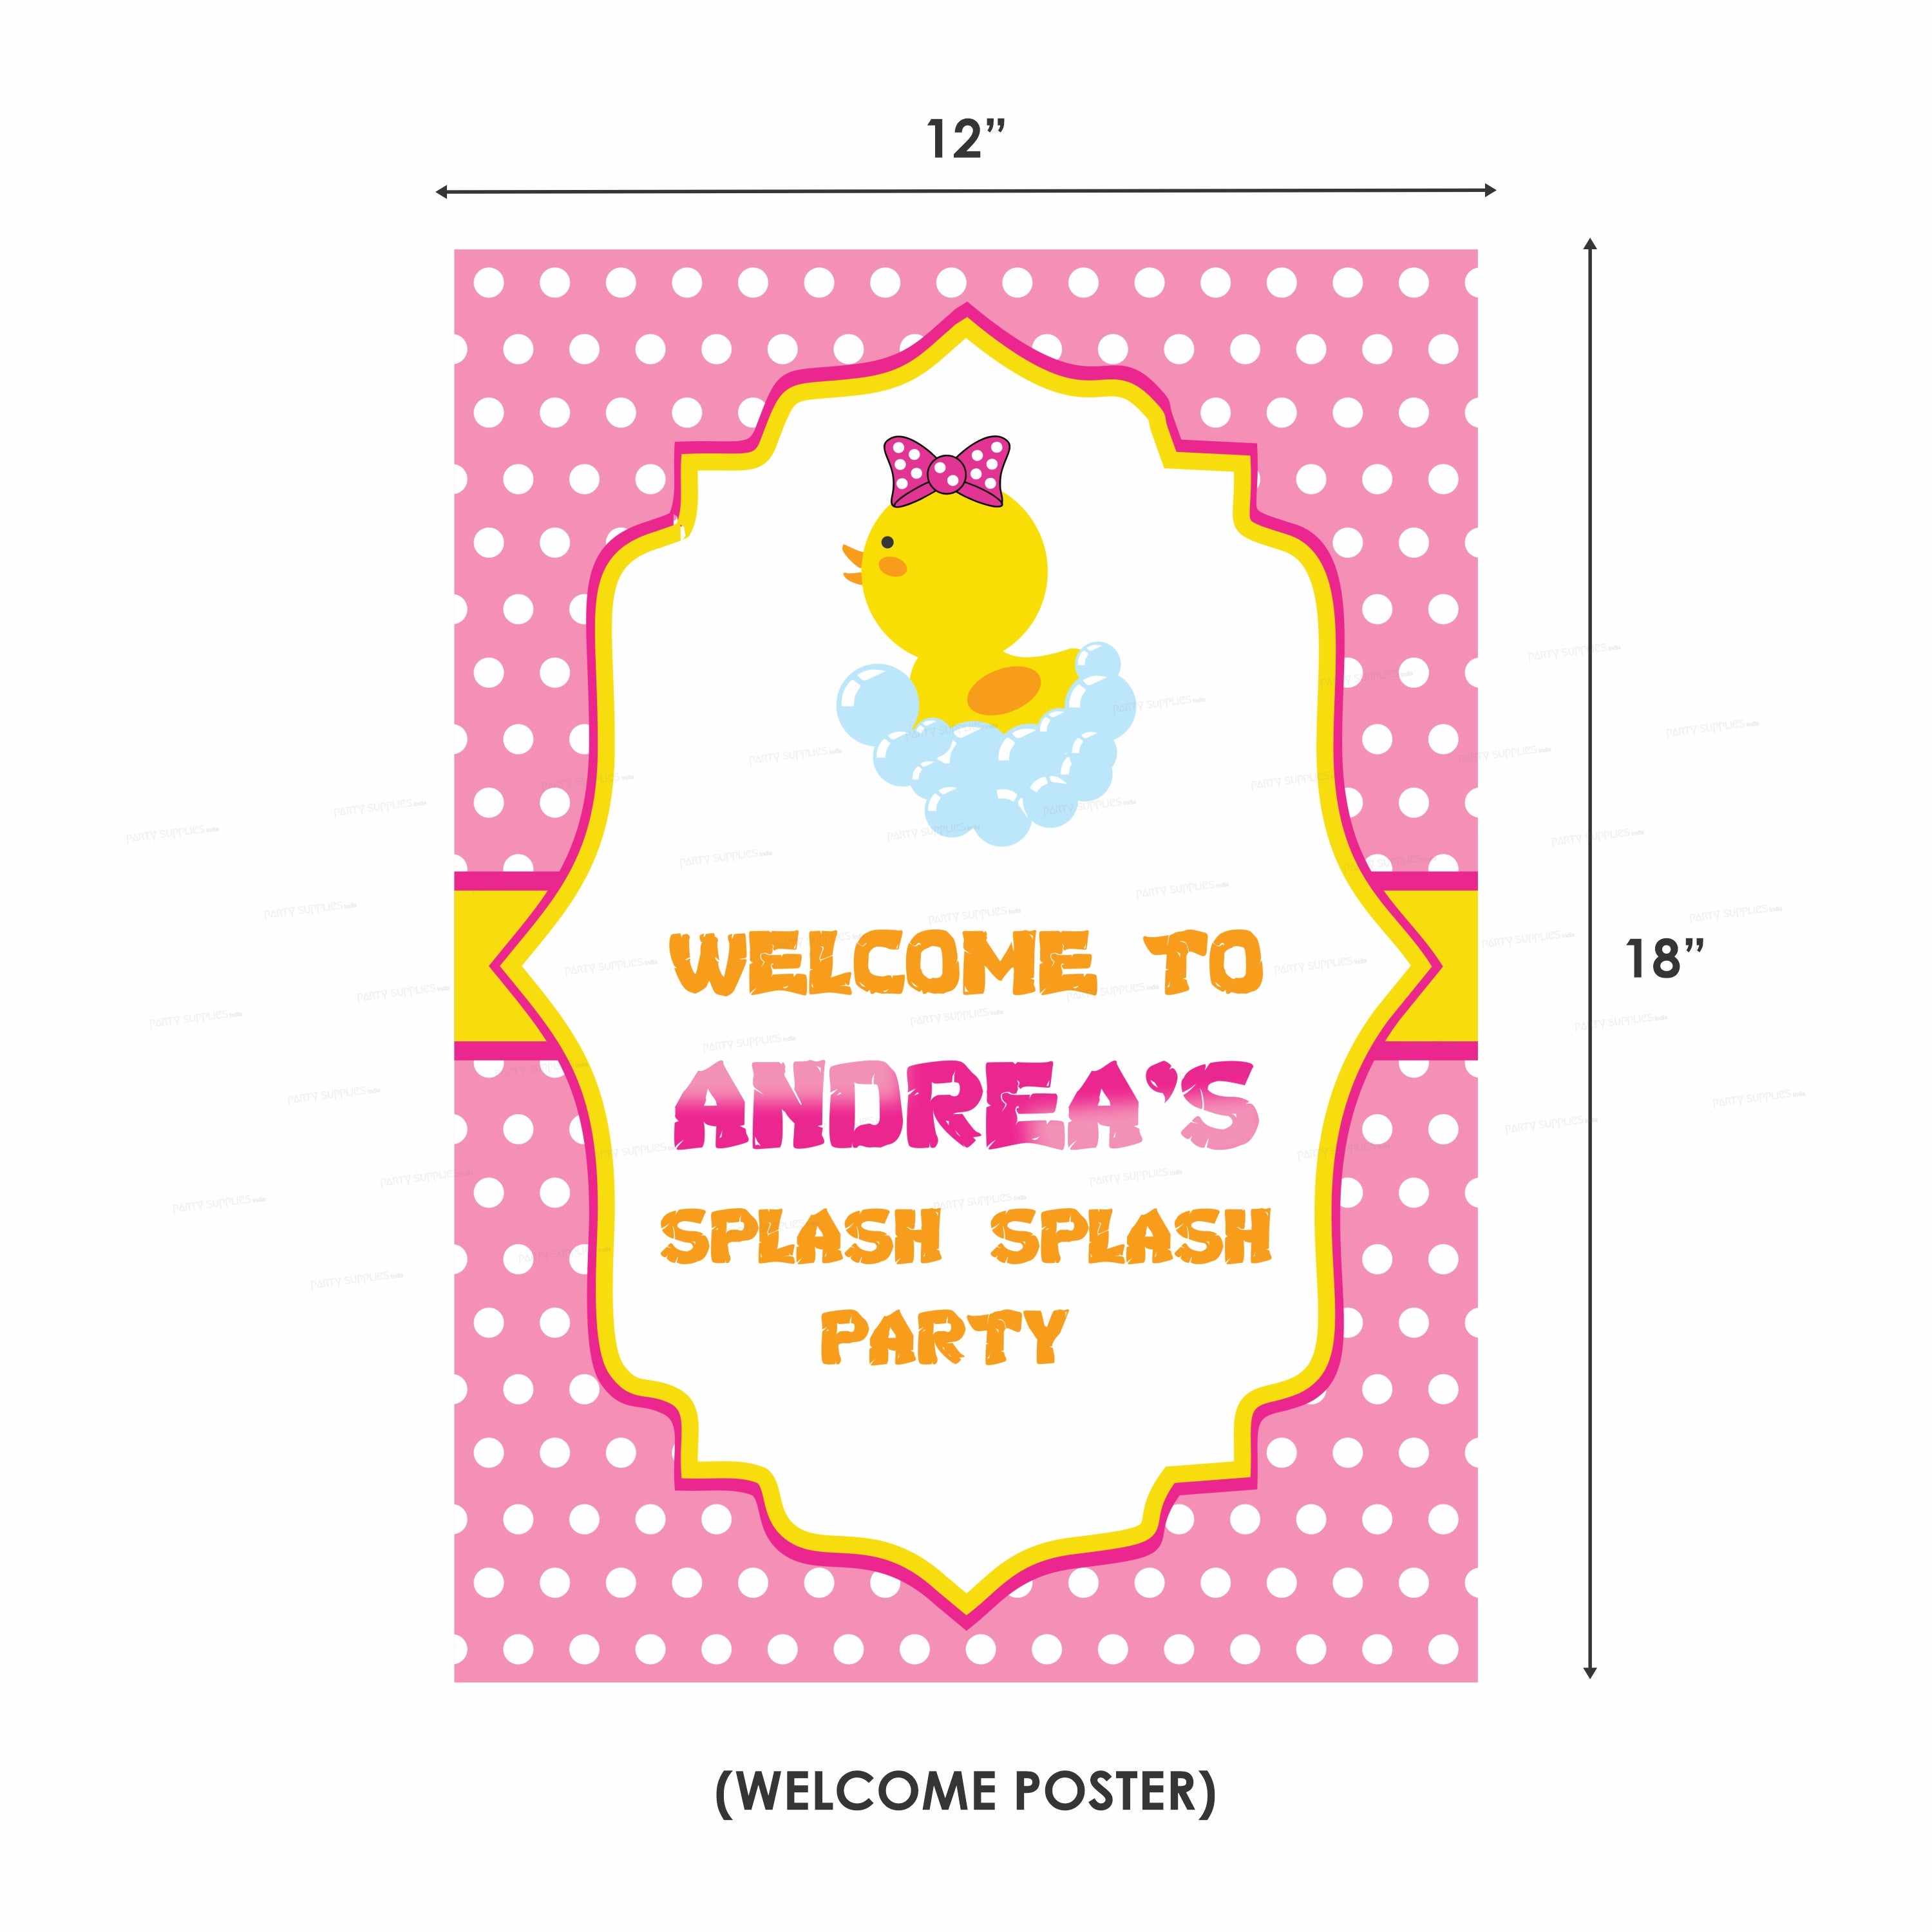 PSI Duck Girl Theme Preferred Kit